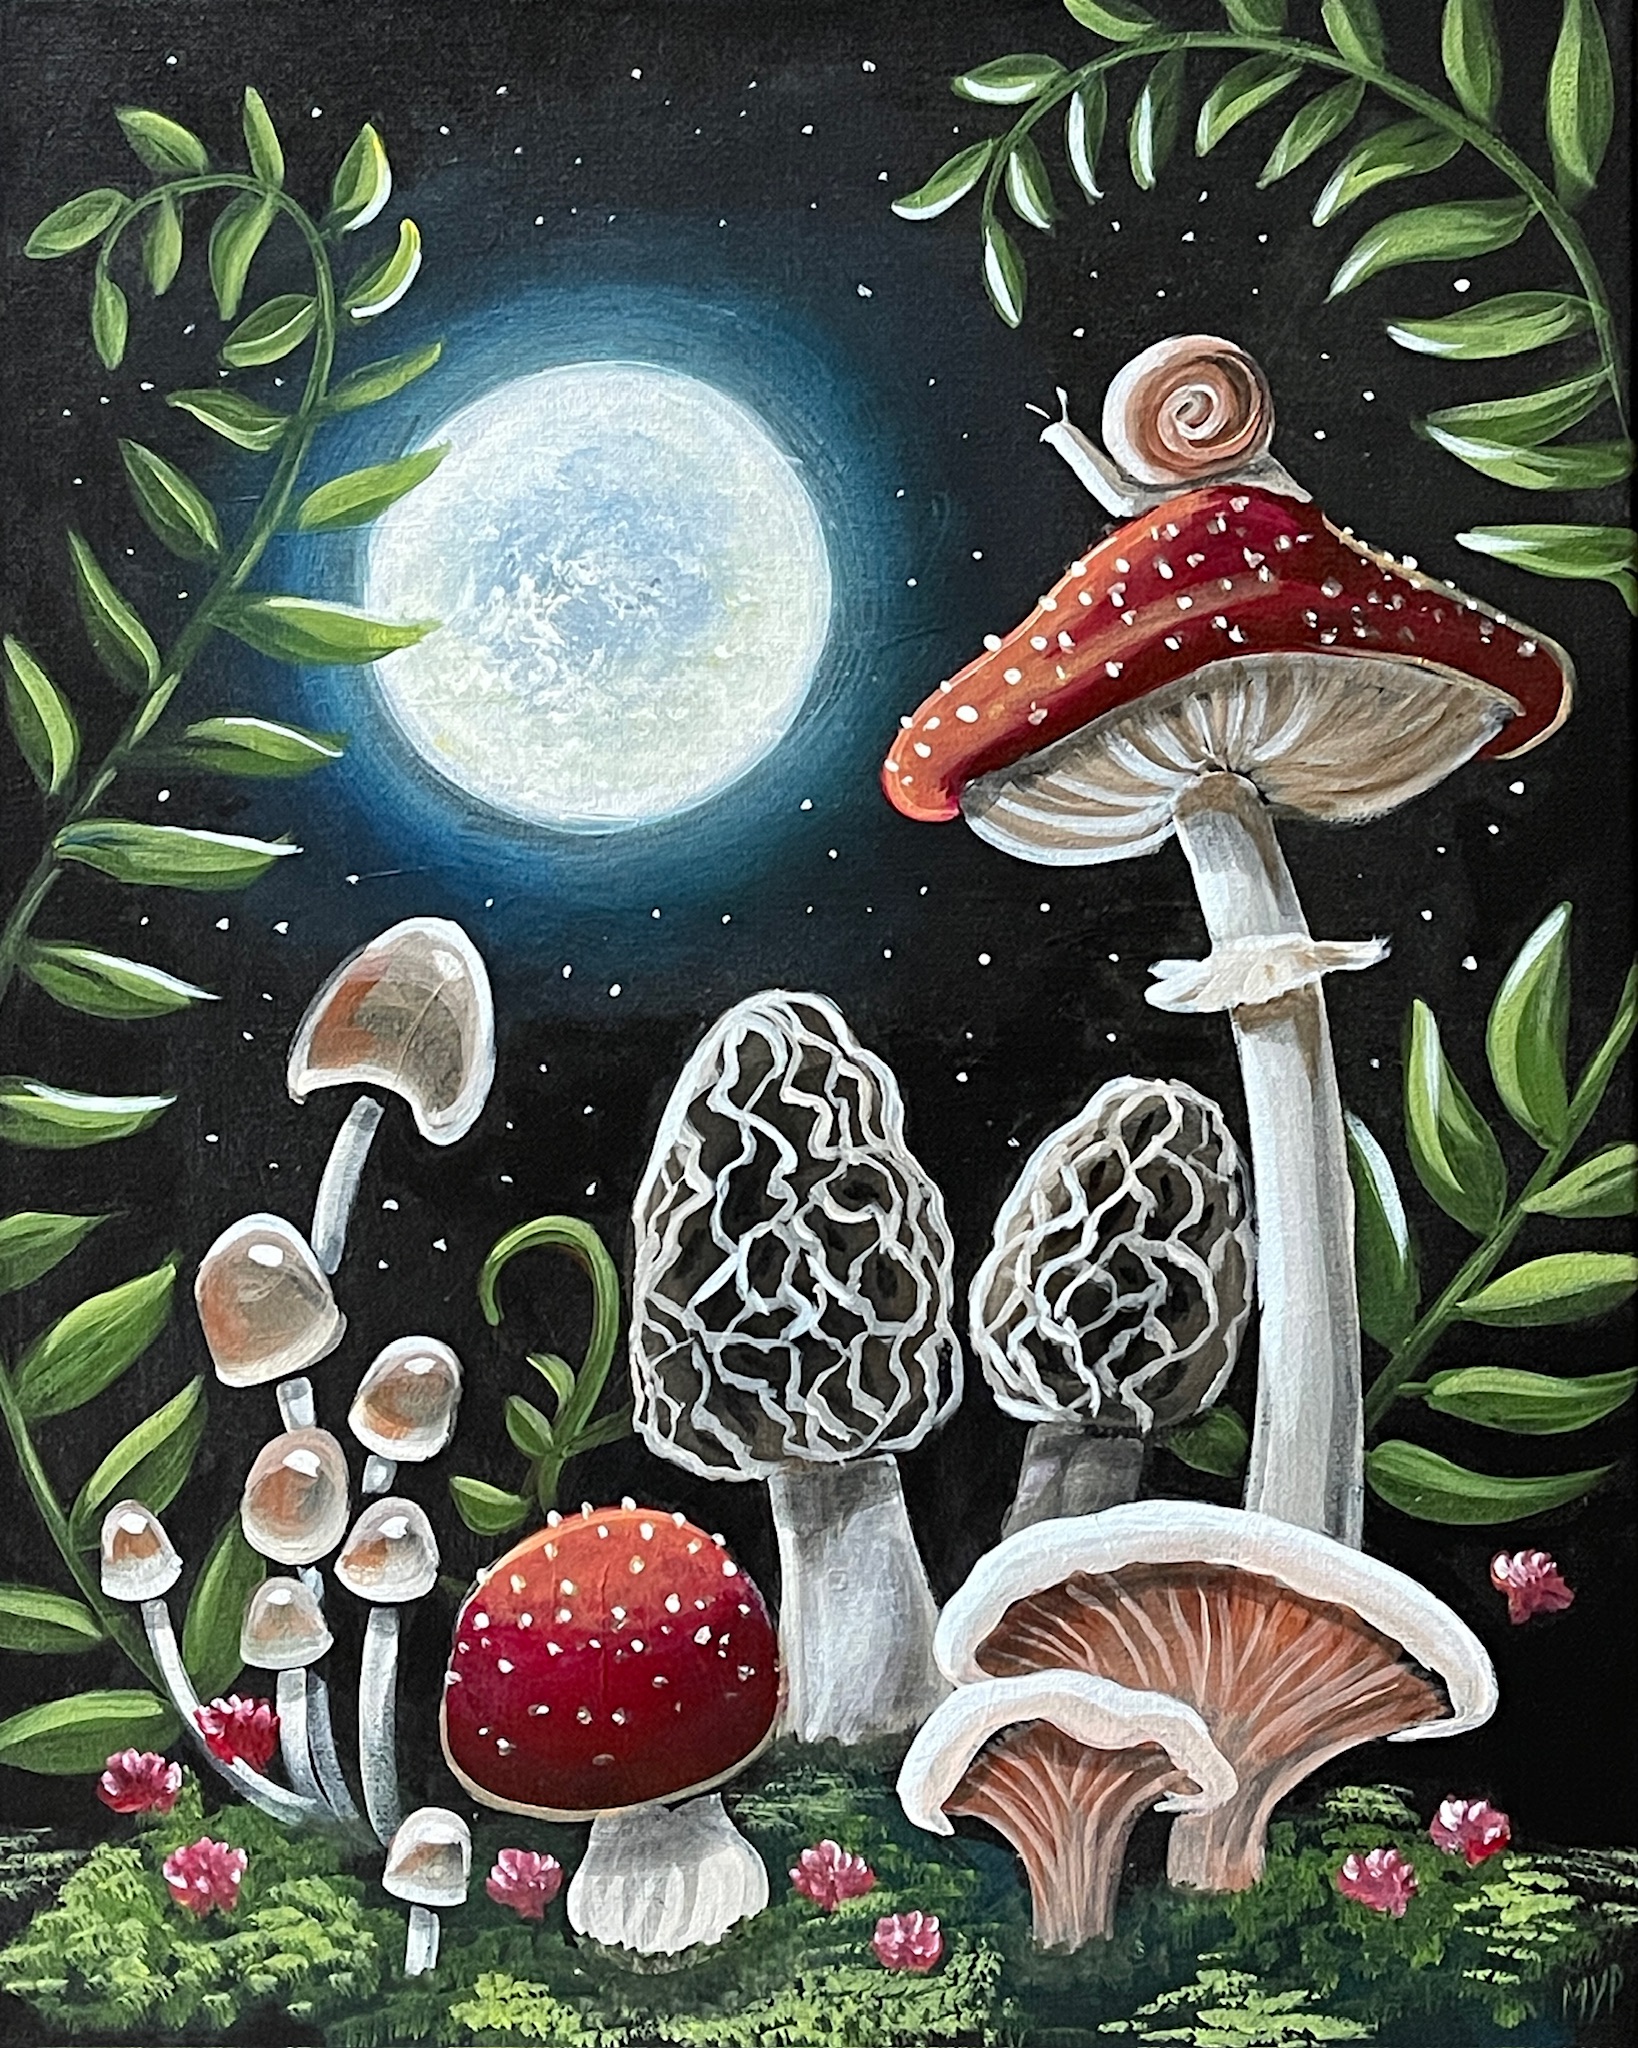 Midnight Mushrooms Reference Image